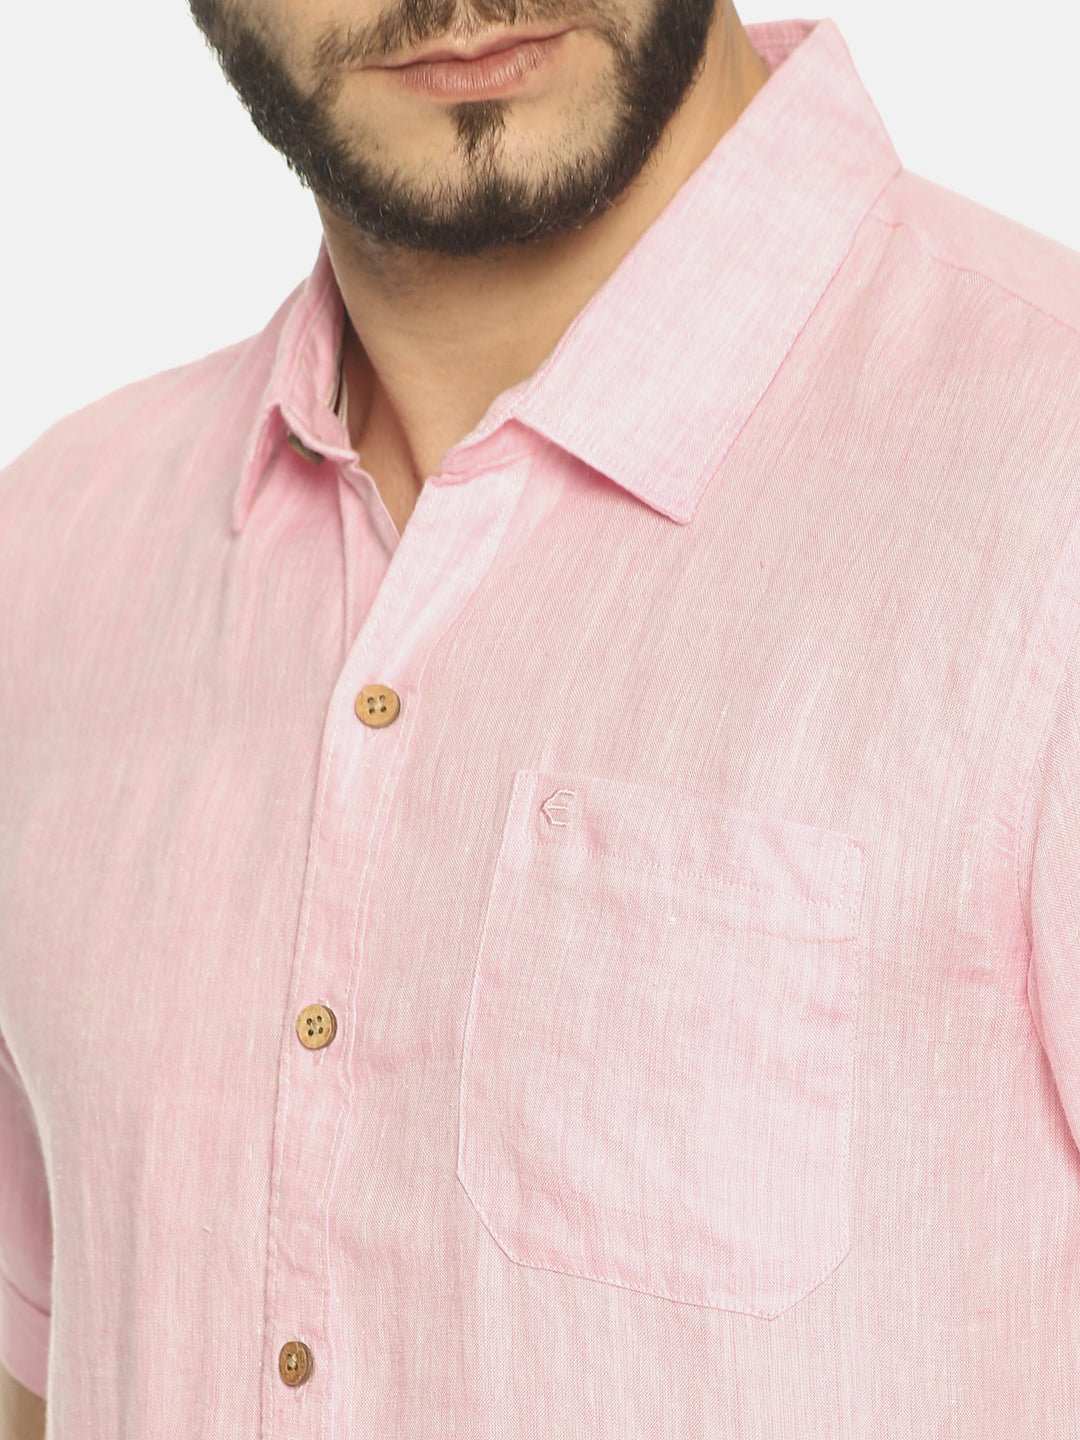 Ecentric Light Pink Colour Slim Fit Hemp Casual Shirt - CBD Store India